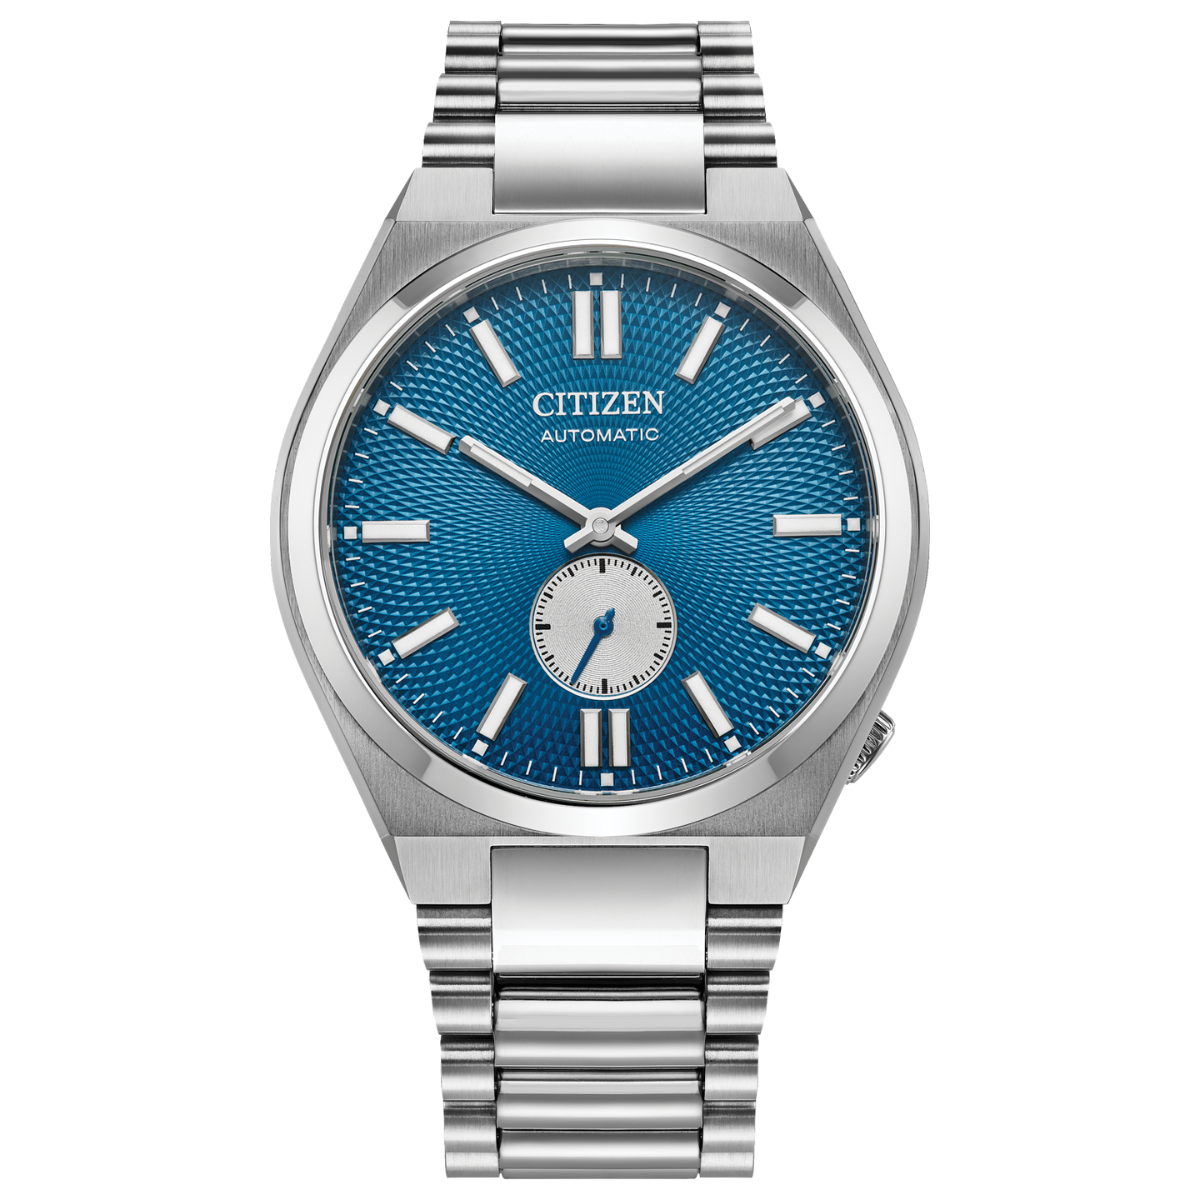 Citizen “TSUYOSA” Small Second Automatic Men's Watch NK5010-51L